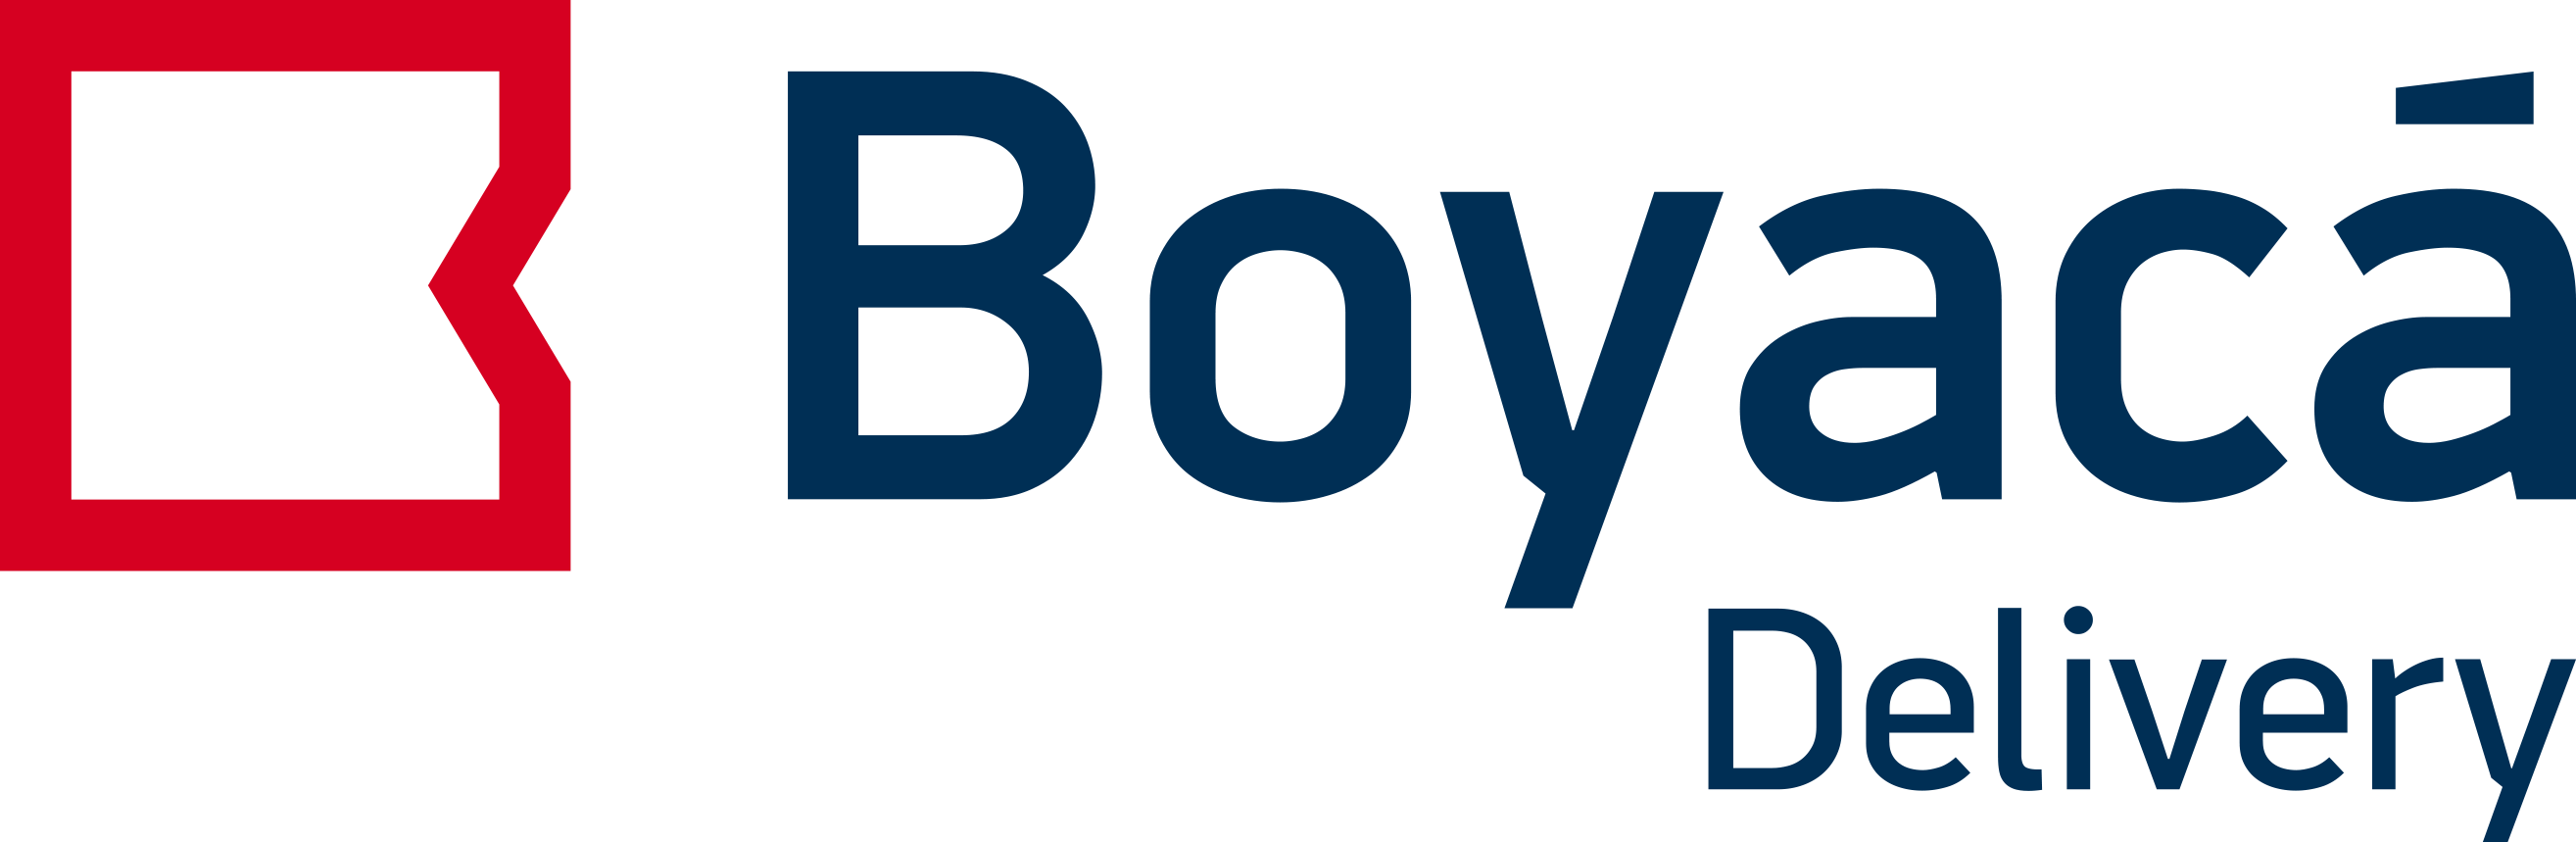 logo_boyaca.png